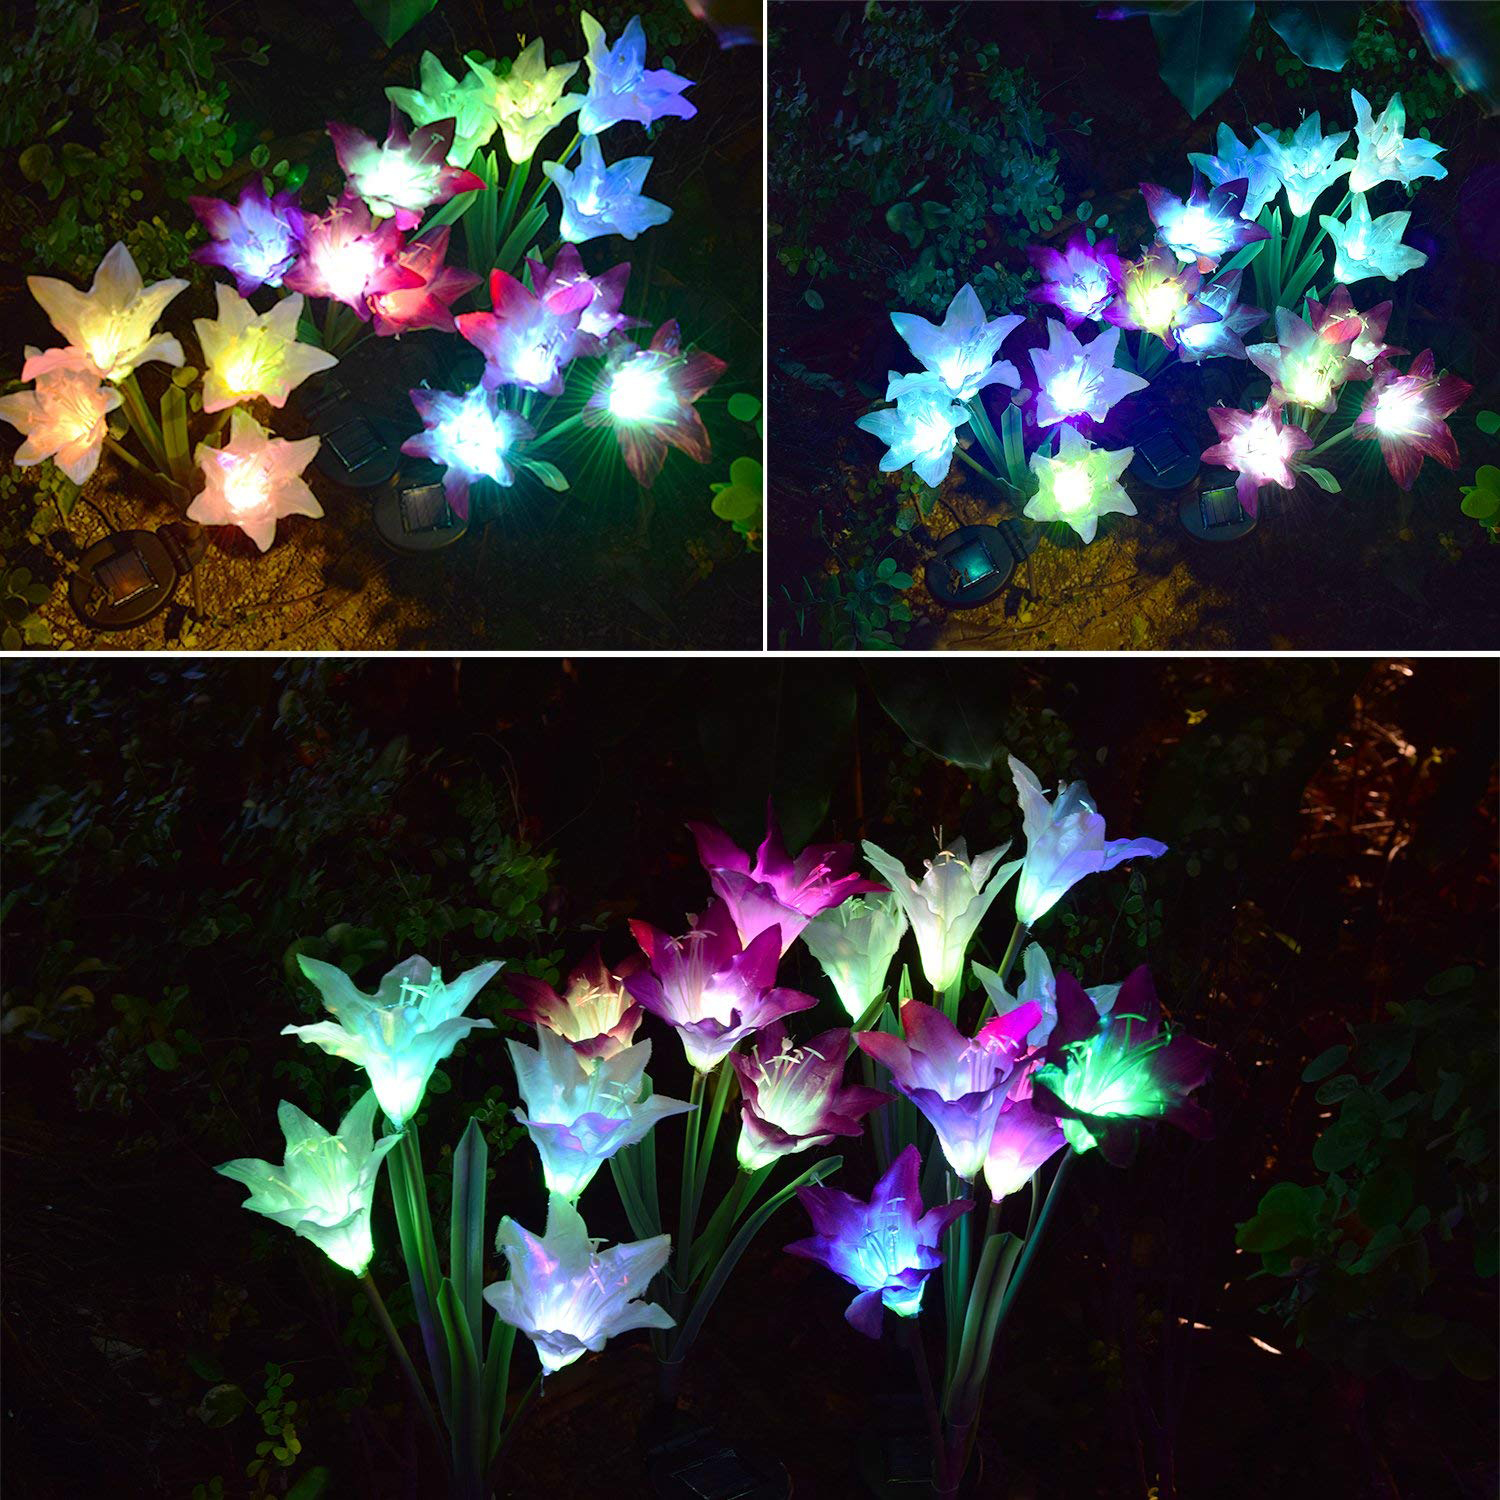 Outdoor Solar Lights Decorative LED Flowers Pack of Solar Lilies Patio  Décor Purple  White Solar Powered Garden Decoration Lights -Backyard  Lighting – Waterproof Lily Flower